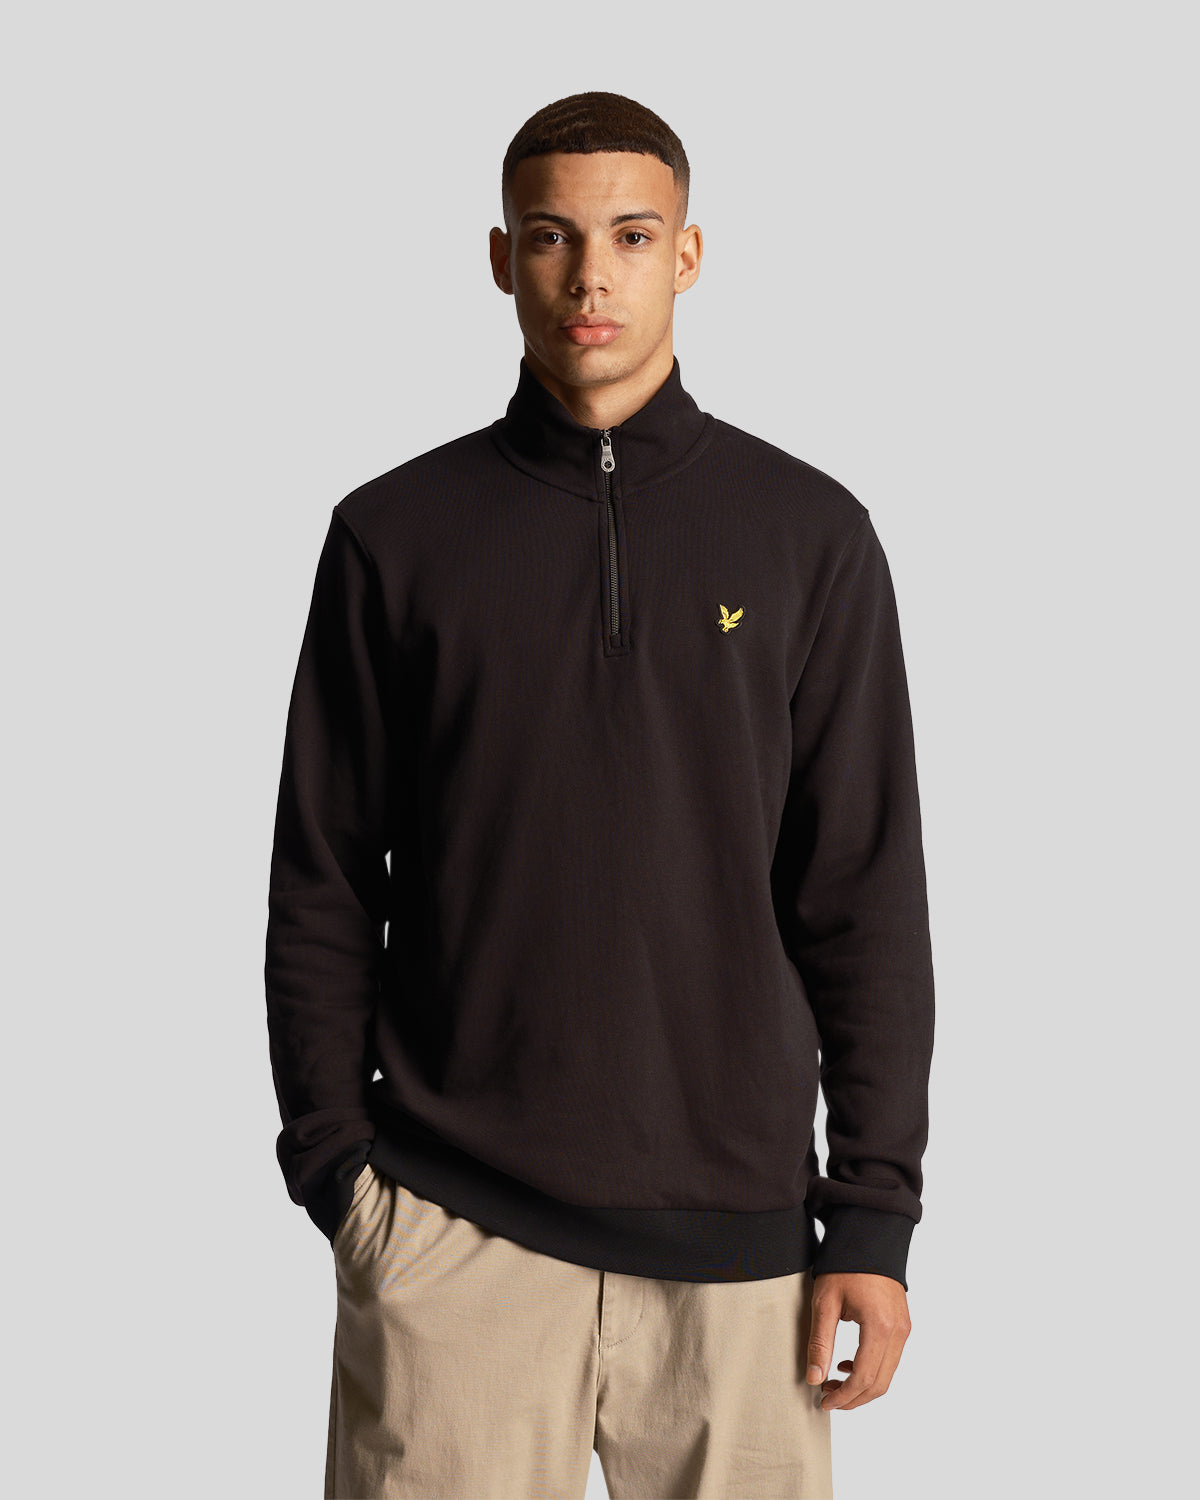 Lyle & Scott Mens Black 1/4 Zip Sweatshirt  - XXL product